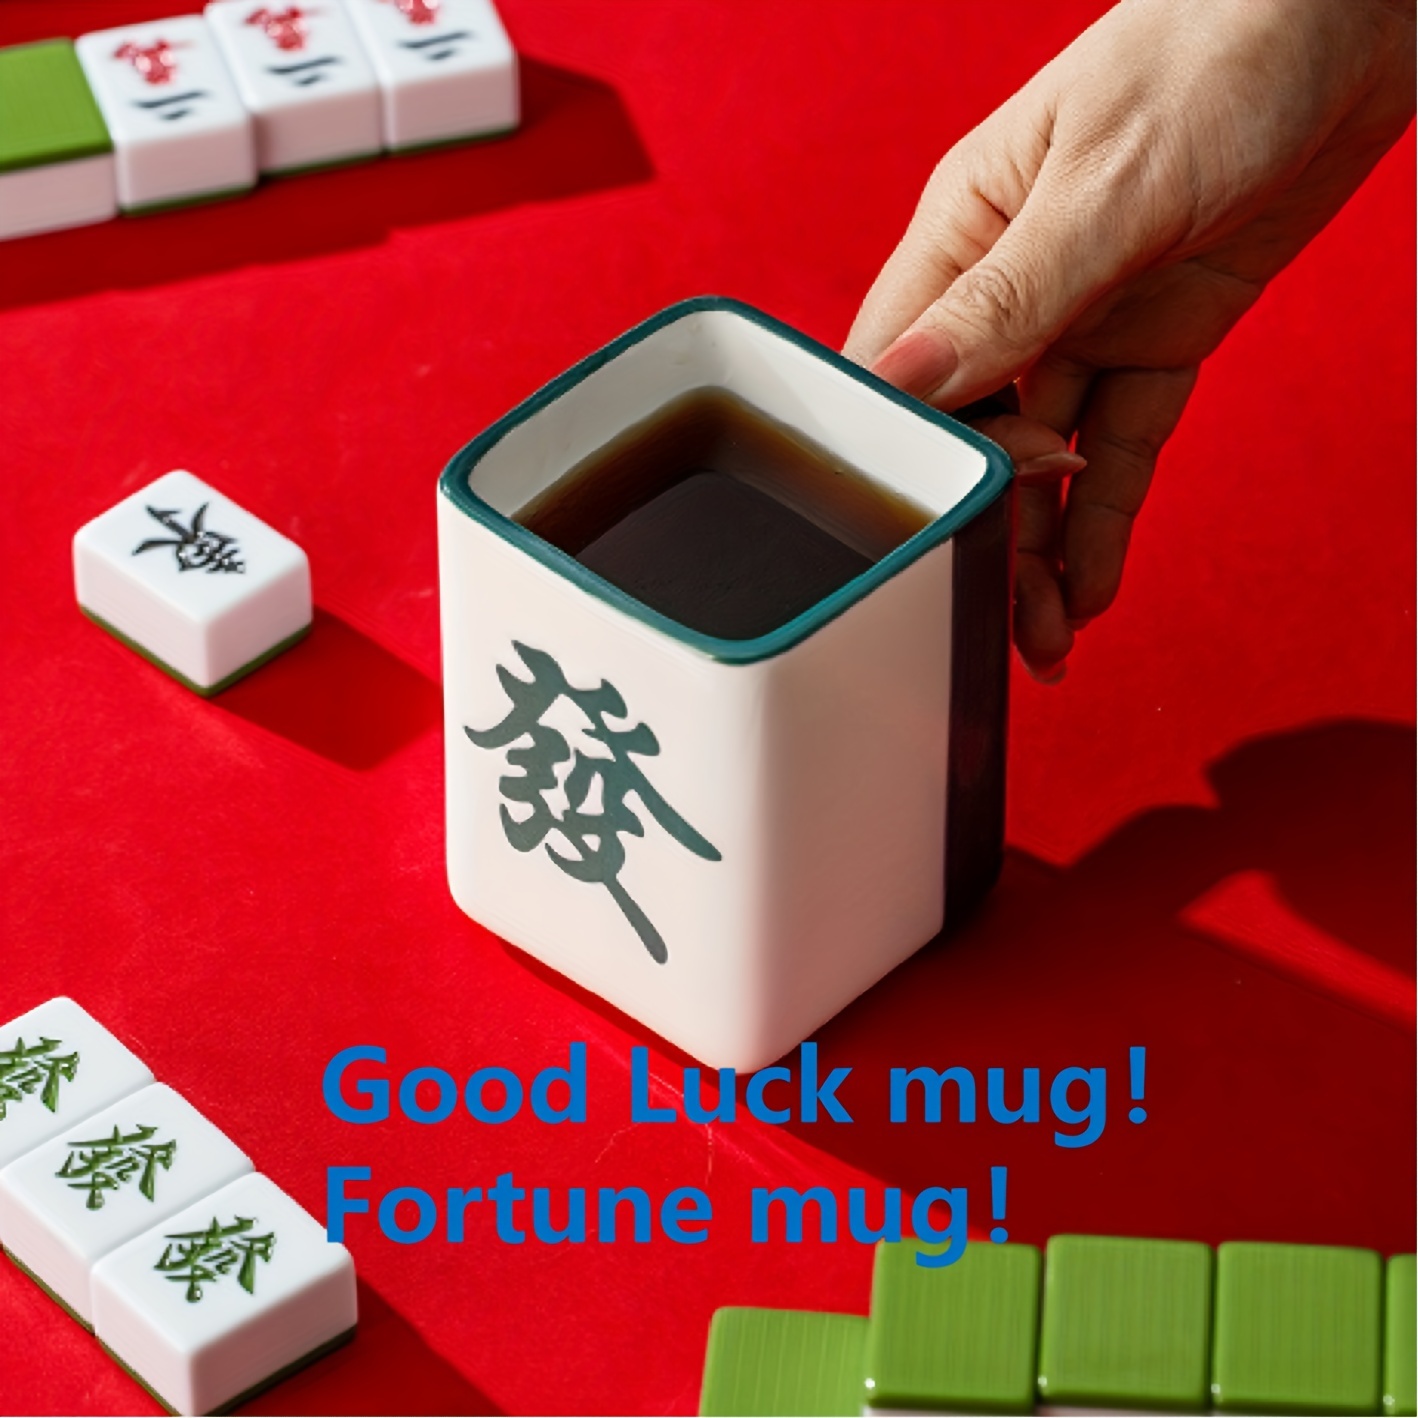 Coffee Mahjong